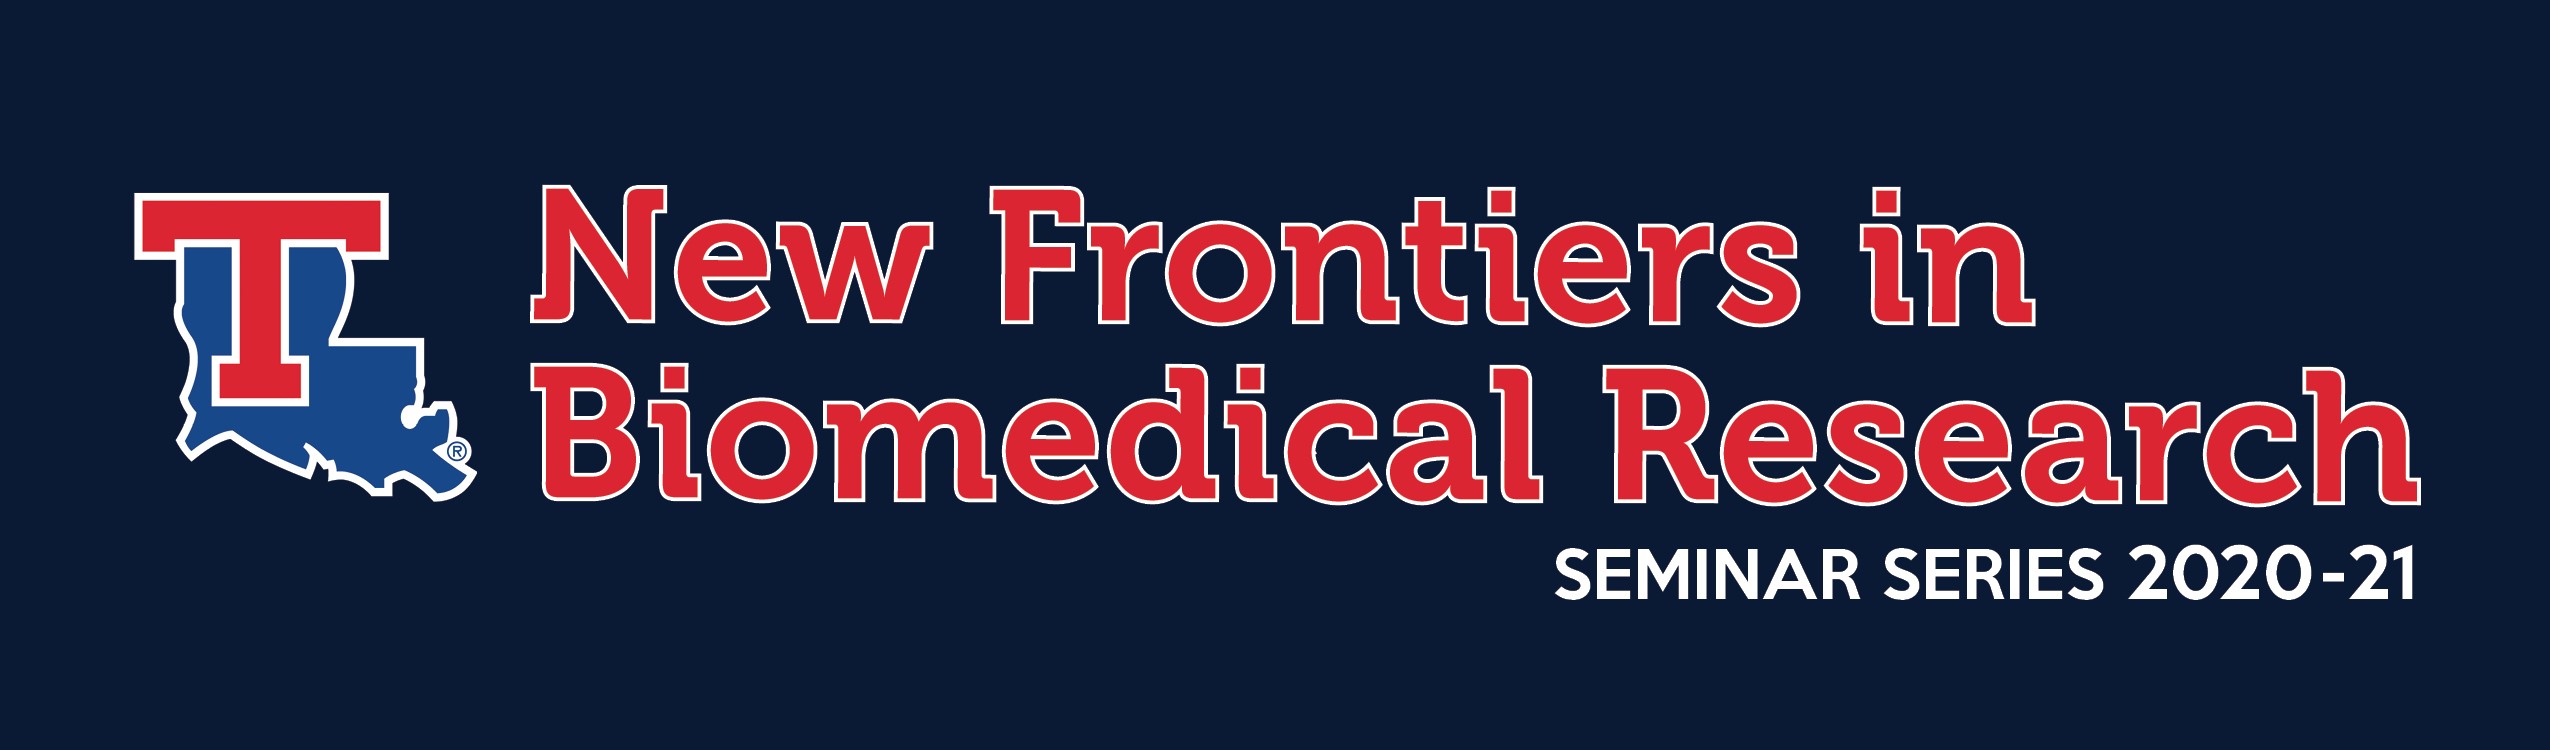 New Frontiers Seminar Logo